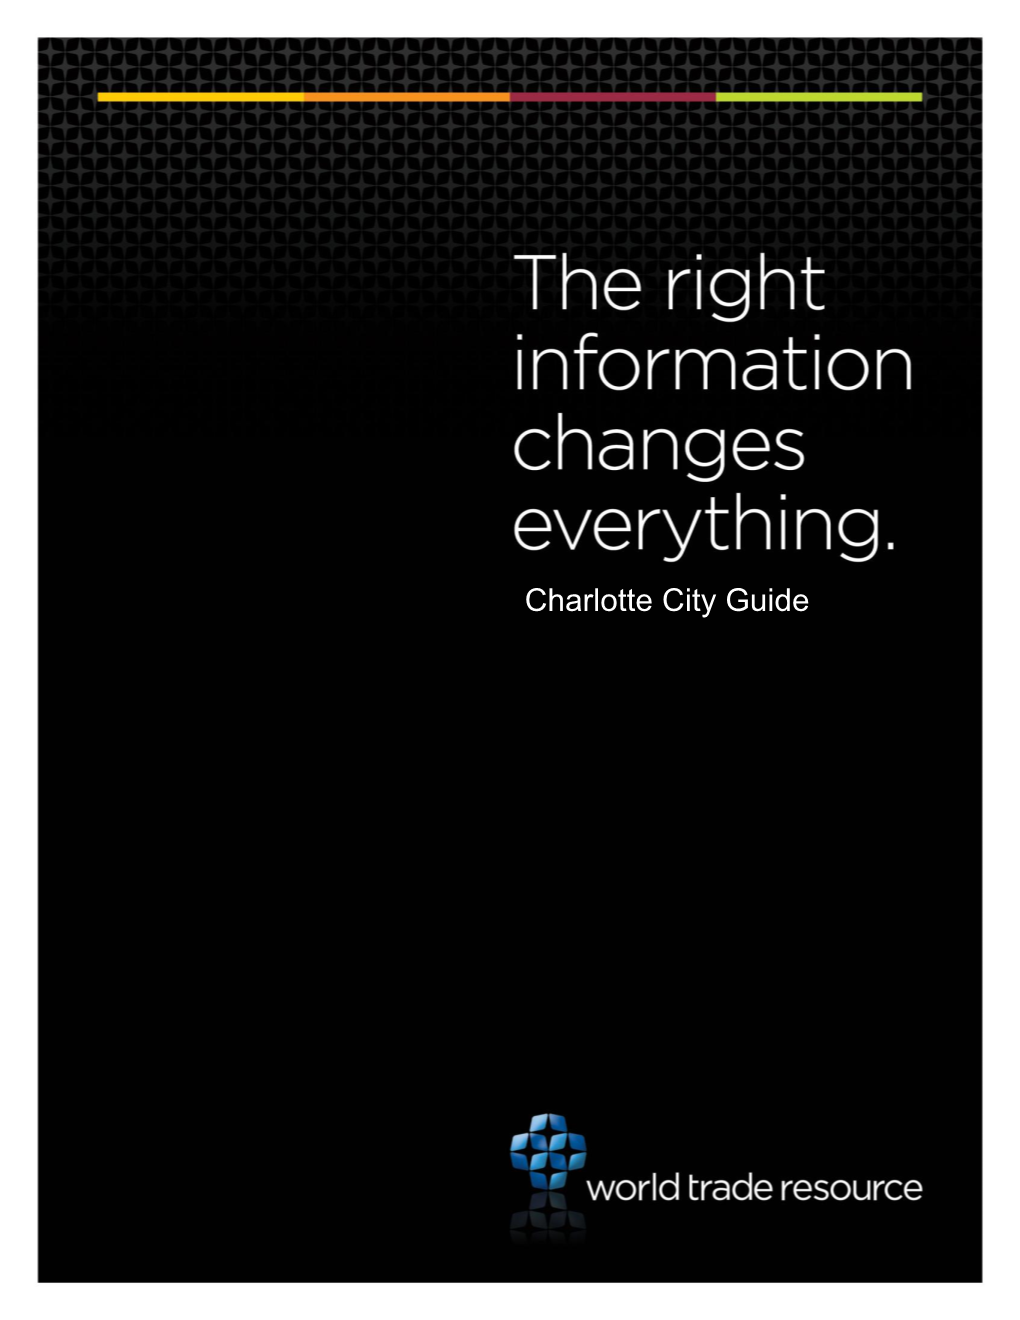 Charlotte City Guide